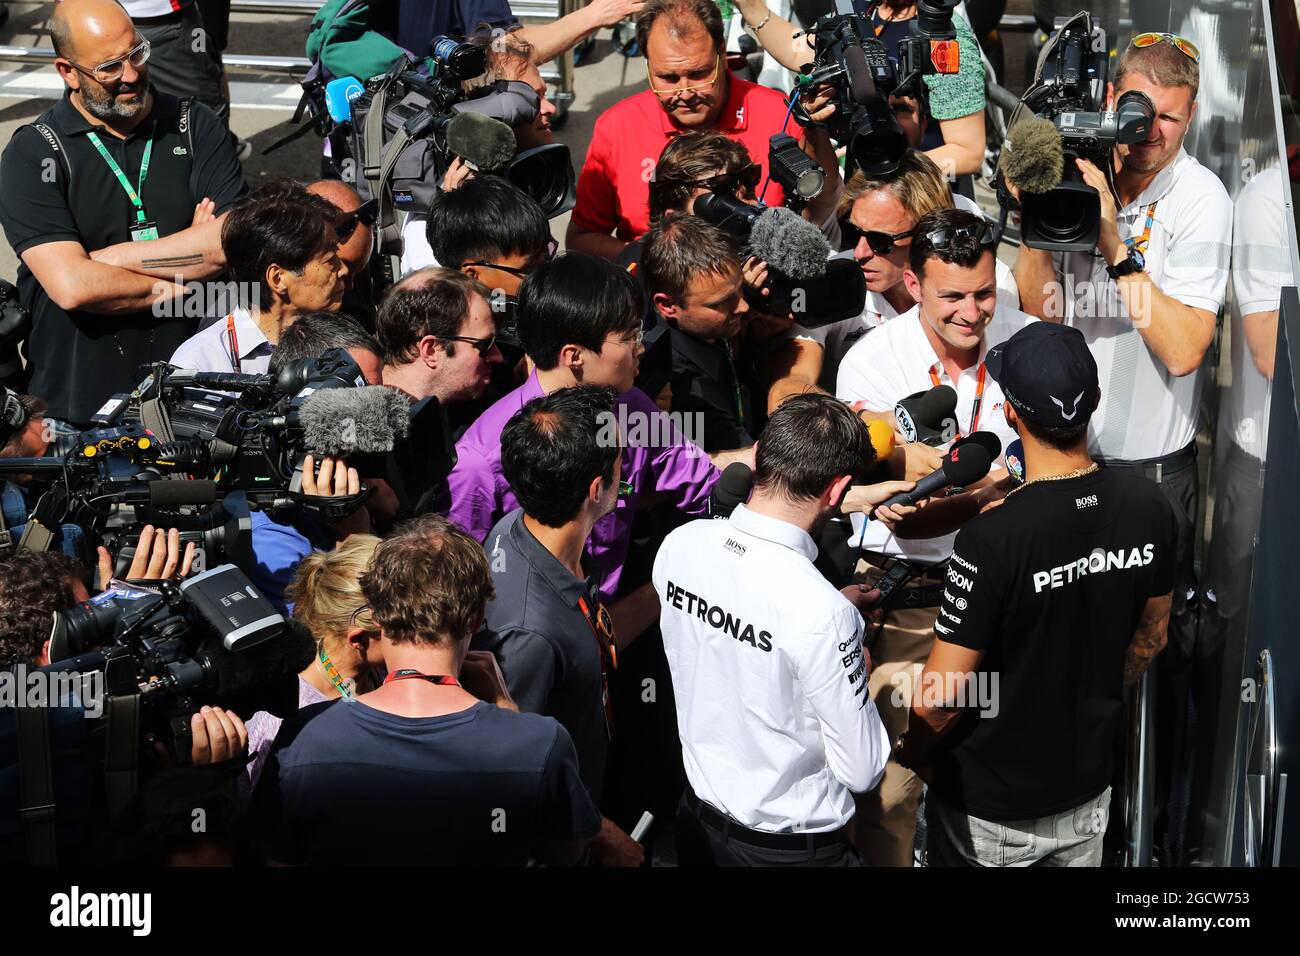 Lewis Hamilton (GBR) Mercedes AMG F1 con WL Buxton (GBR) NBS Sports Network TV Presenter y los medios de comunicación. Gran Premio de España, jueves 7th de mayo de 2015. Barcelona, España. Foto de stock